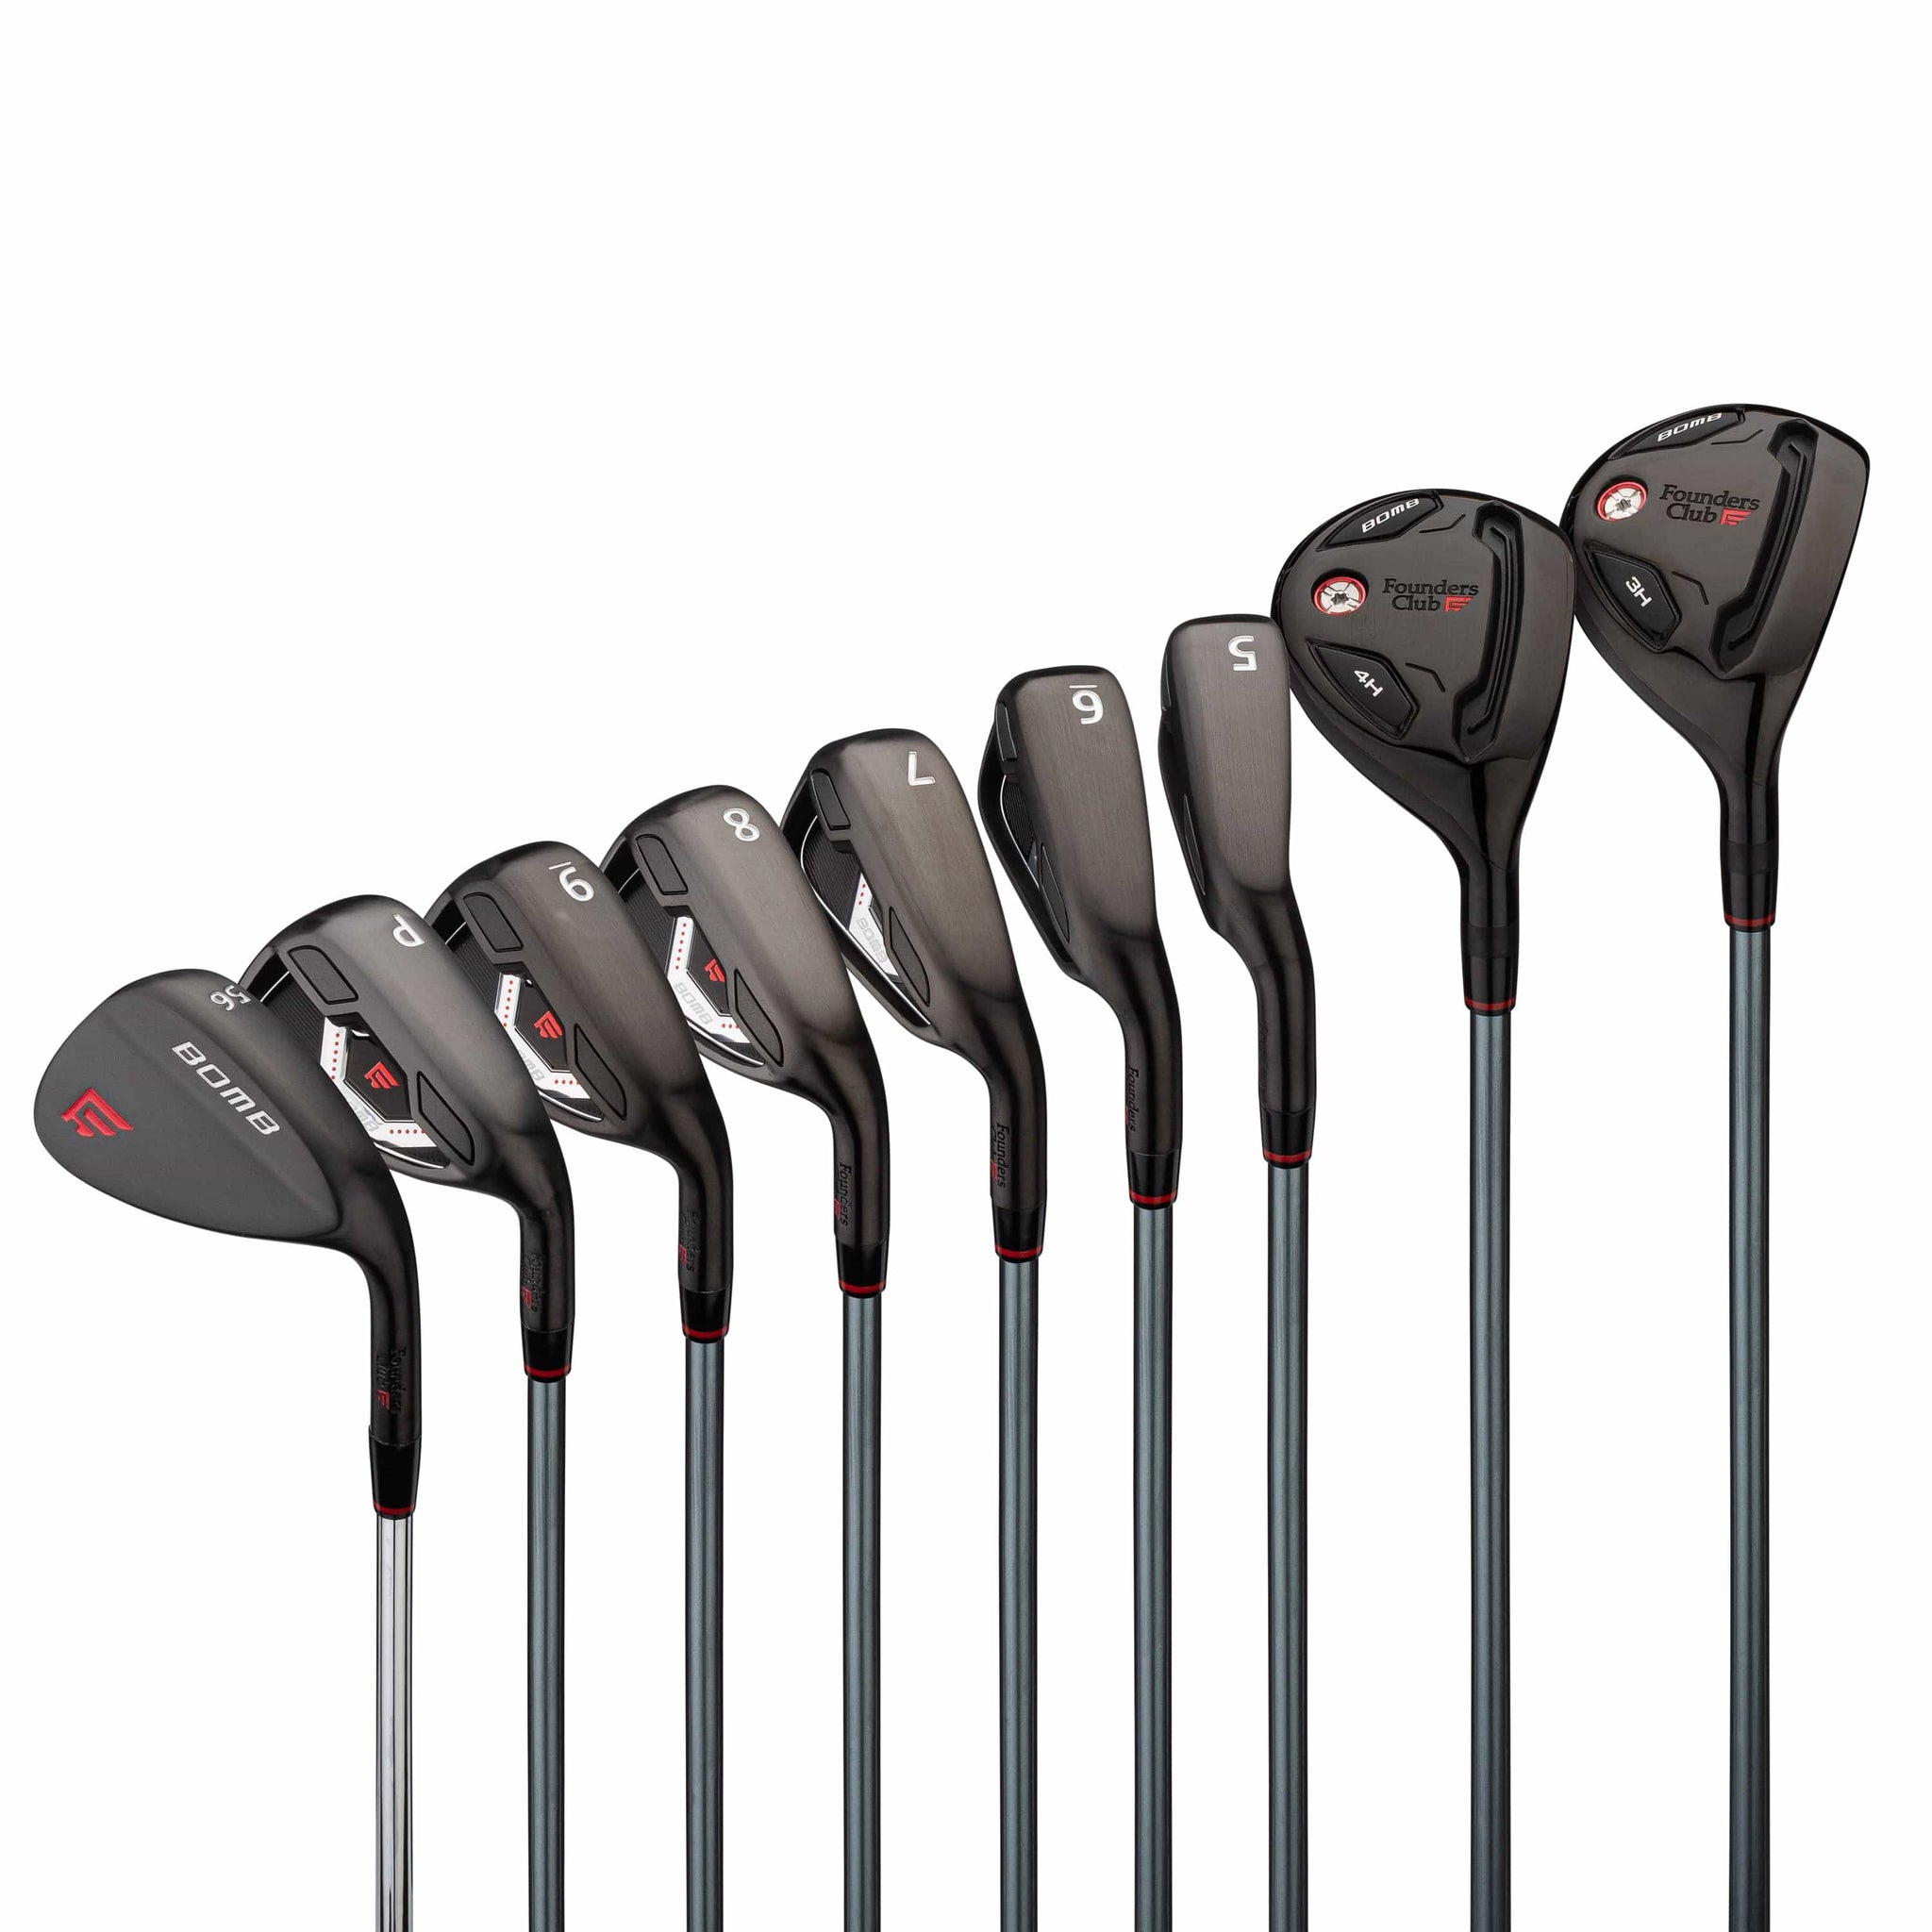 Golf Irons & Iron Sets